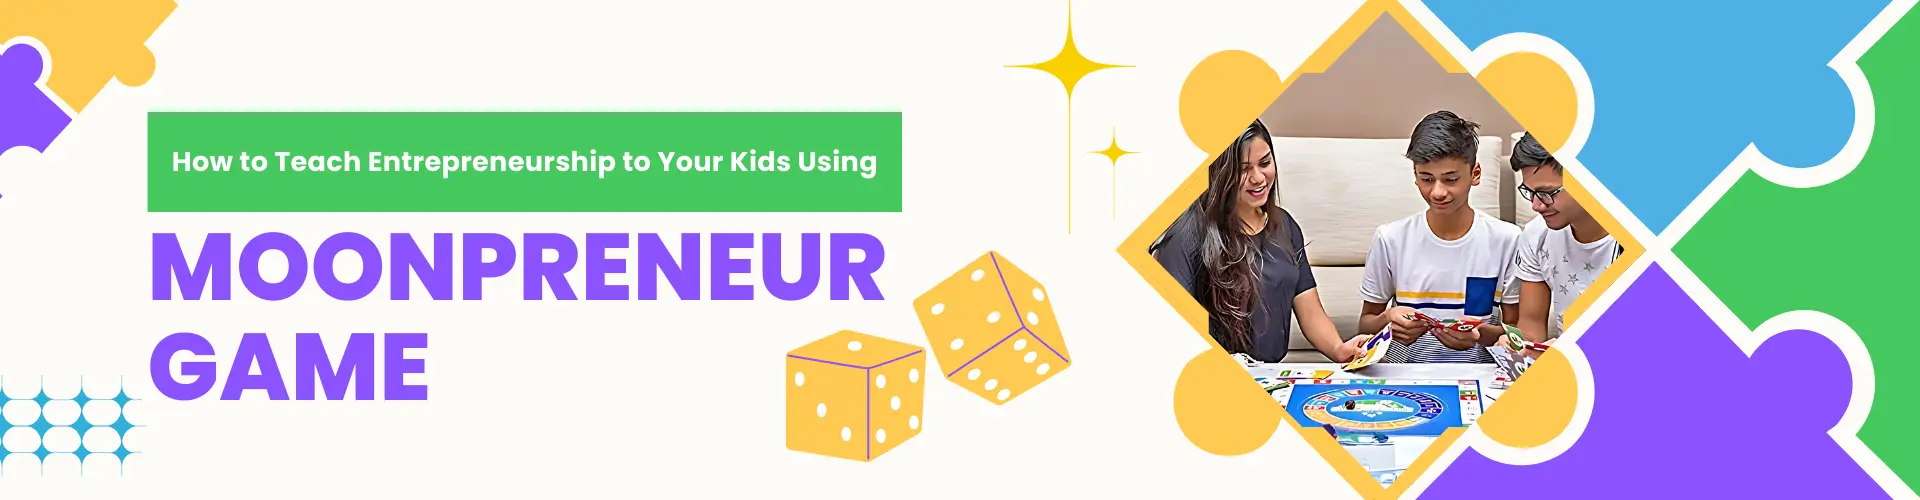 How To Teach Entrepreneurship To Your Kids Using Moonpreneur Game